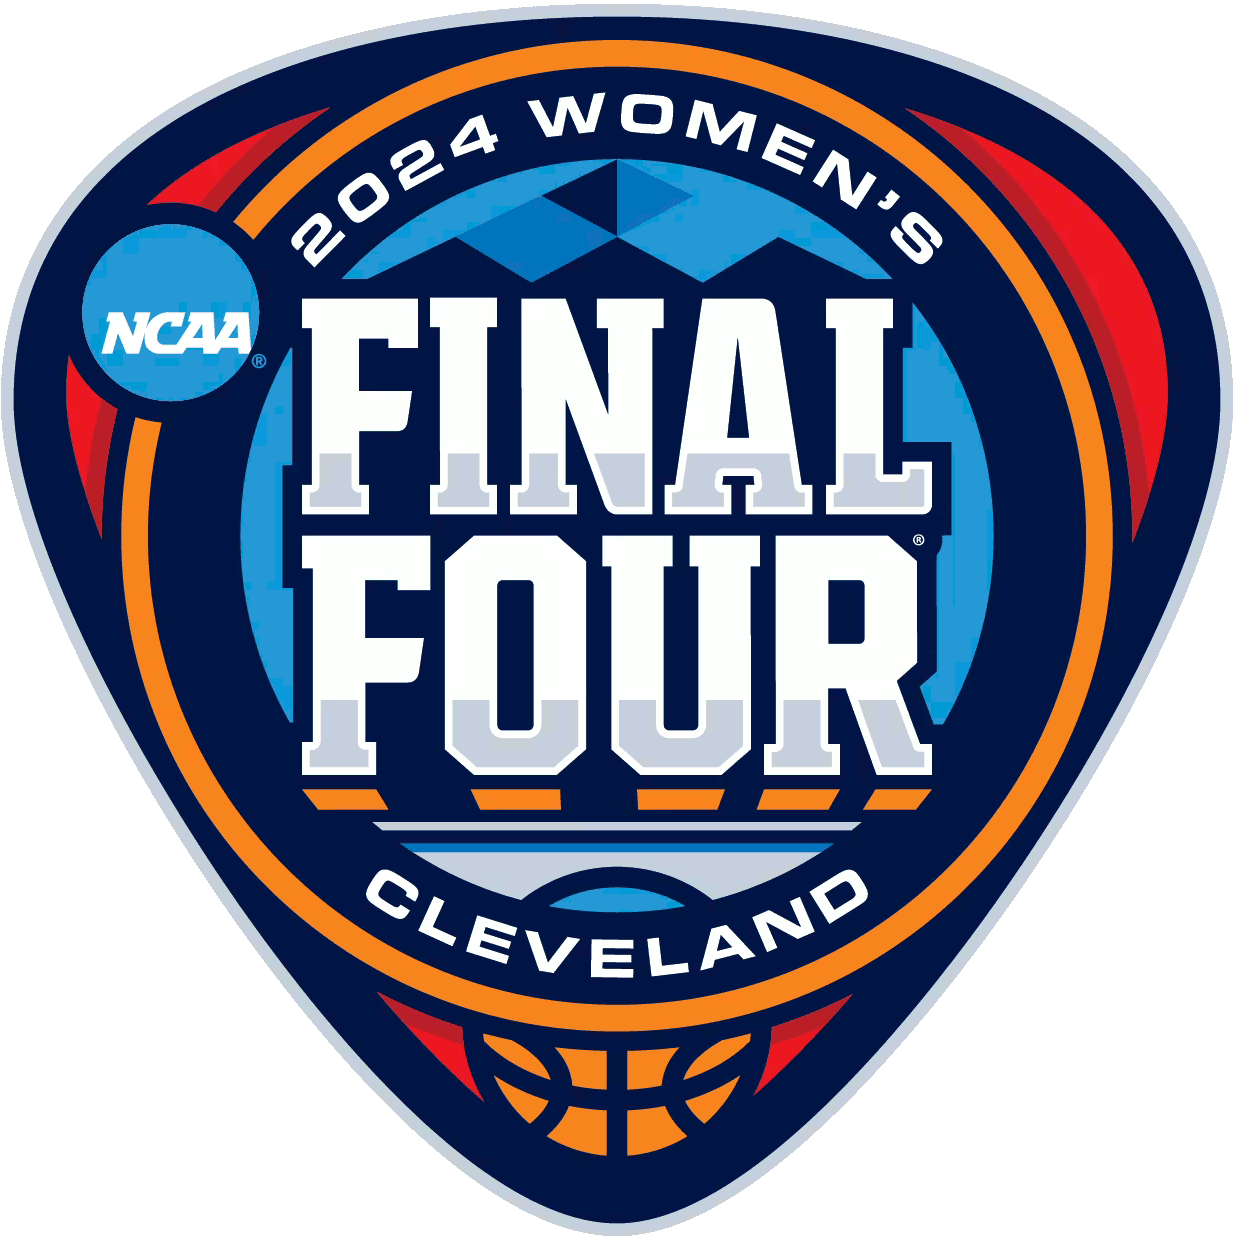  Take GCRTA to the NCAA Women’s Final Four Championship Weekend